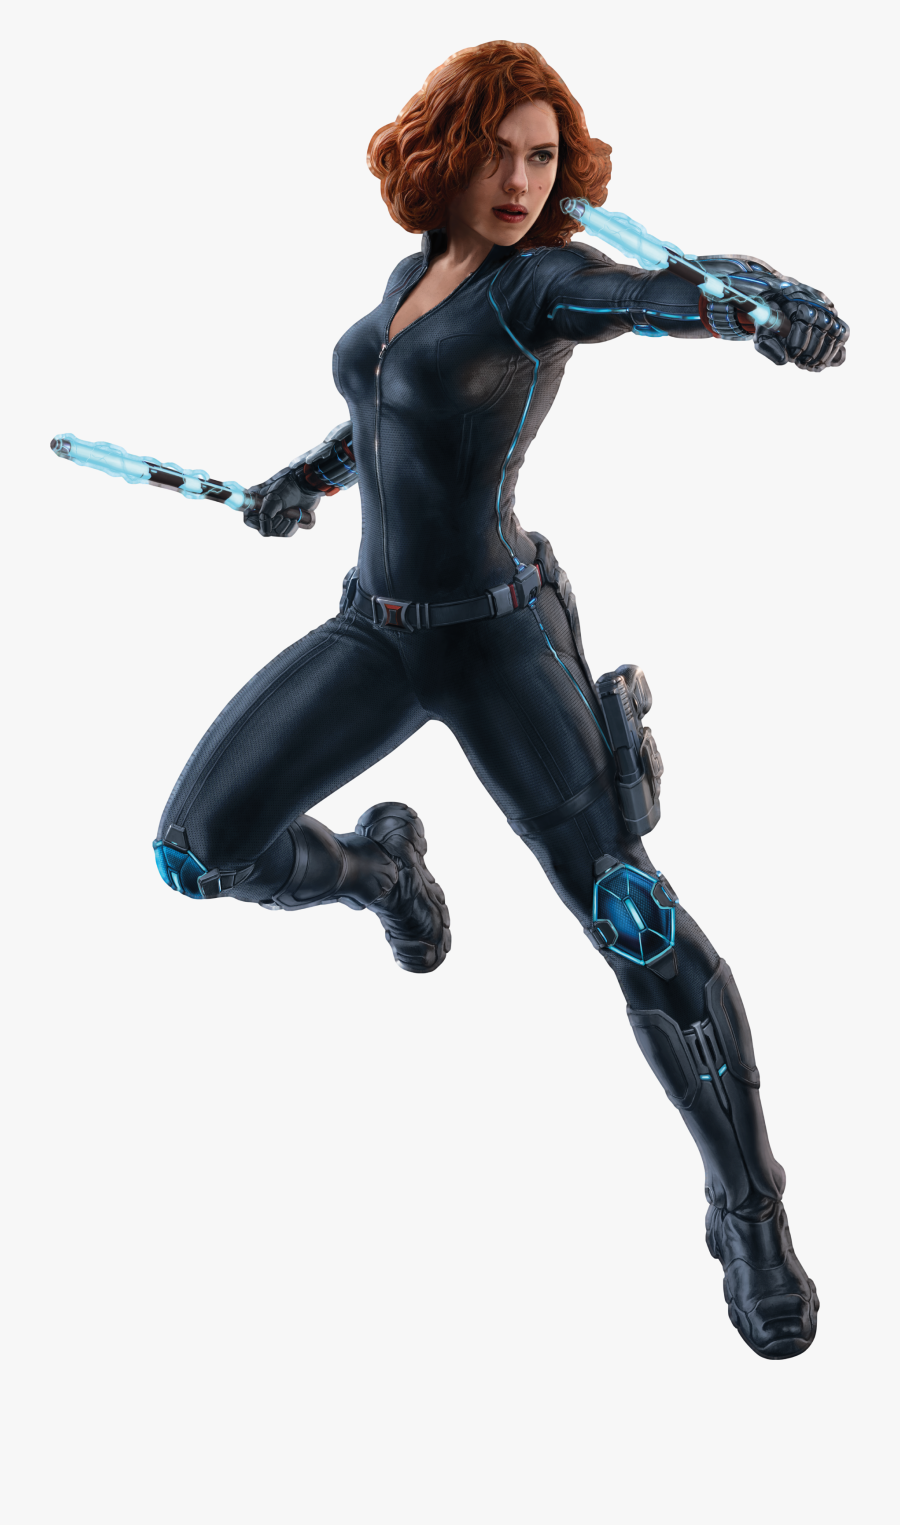 Scarlett Johansson Marvel - Black Widow Avengers Png, Transparent Clipart